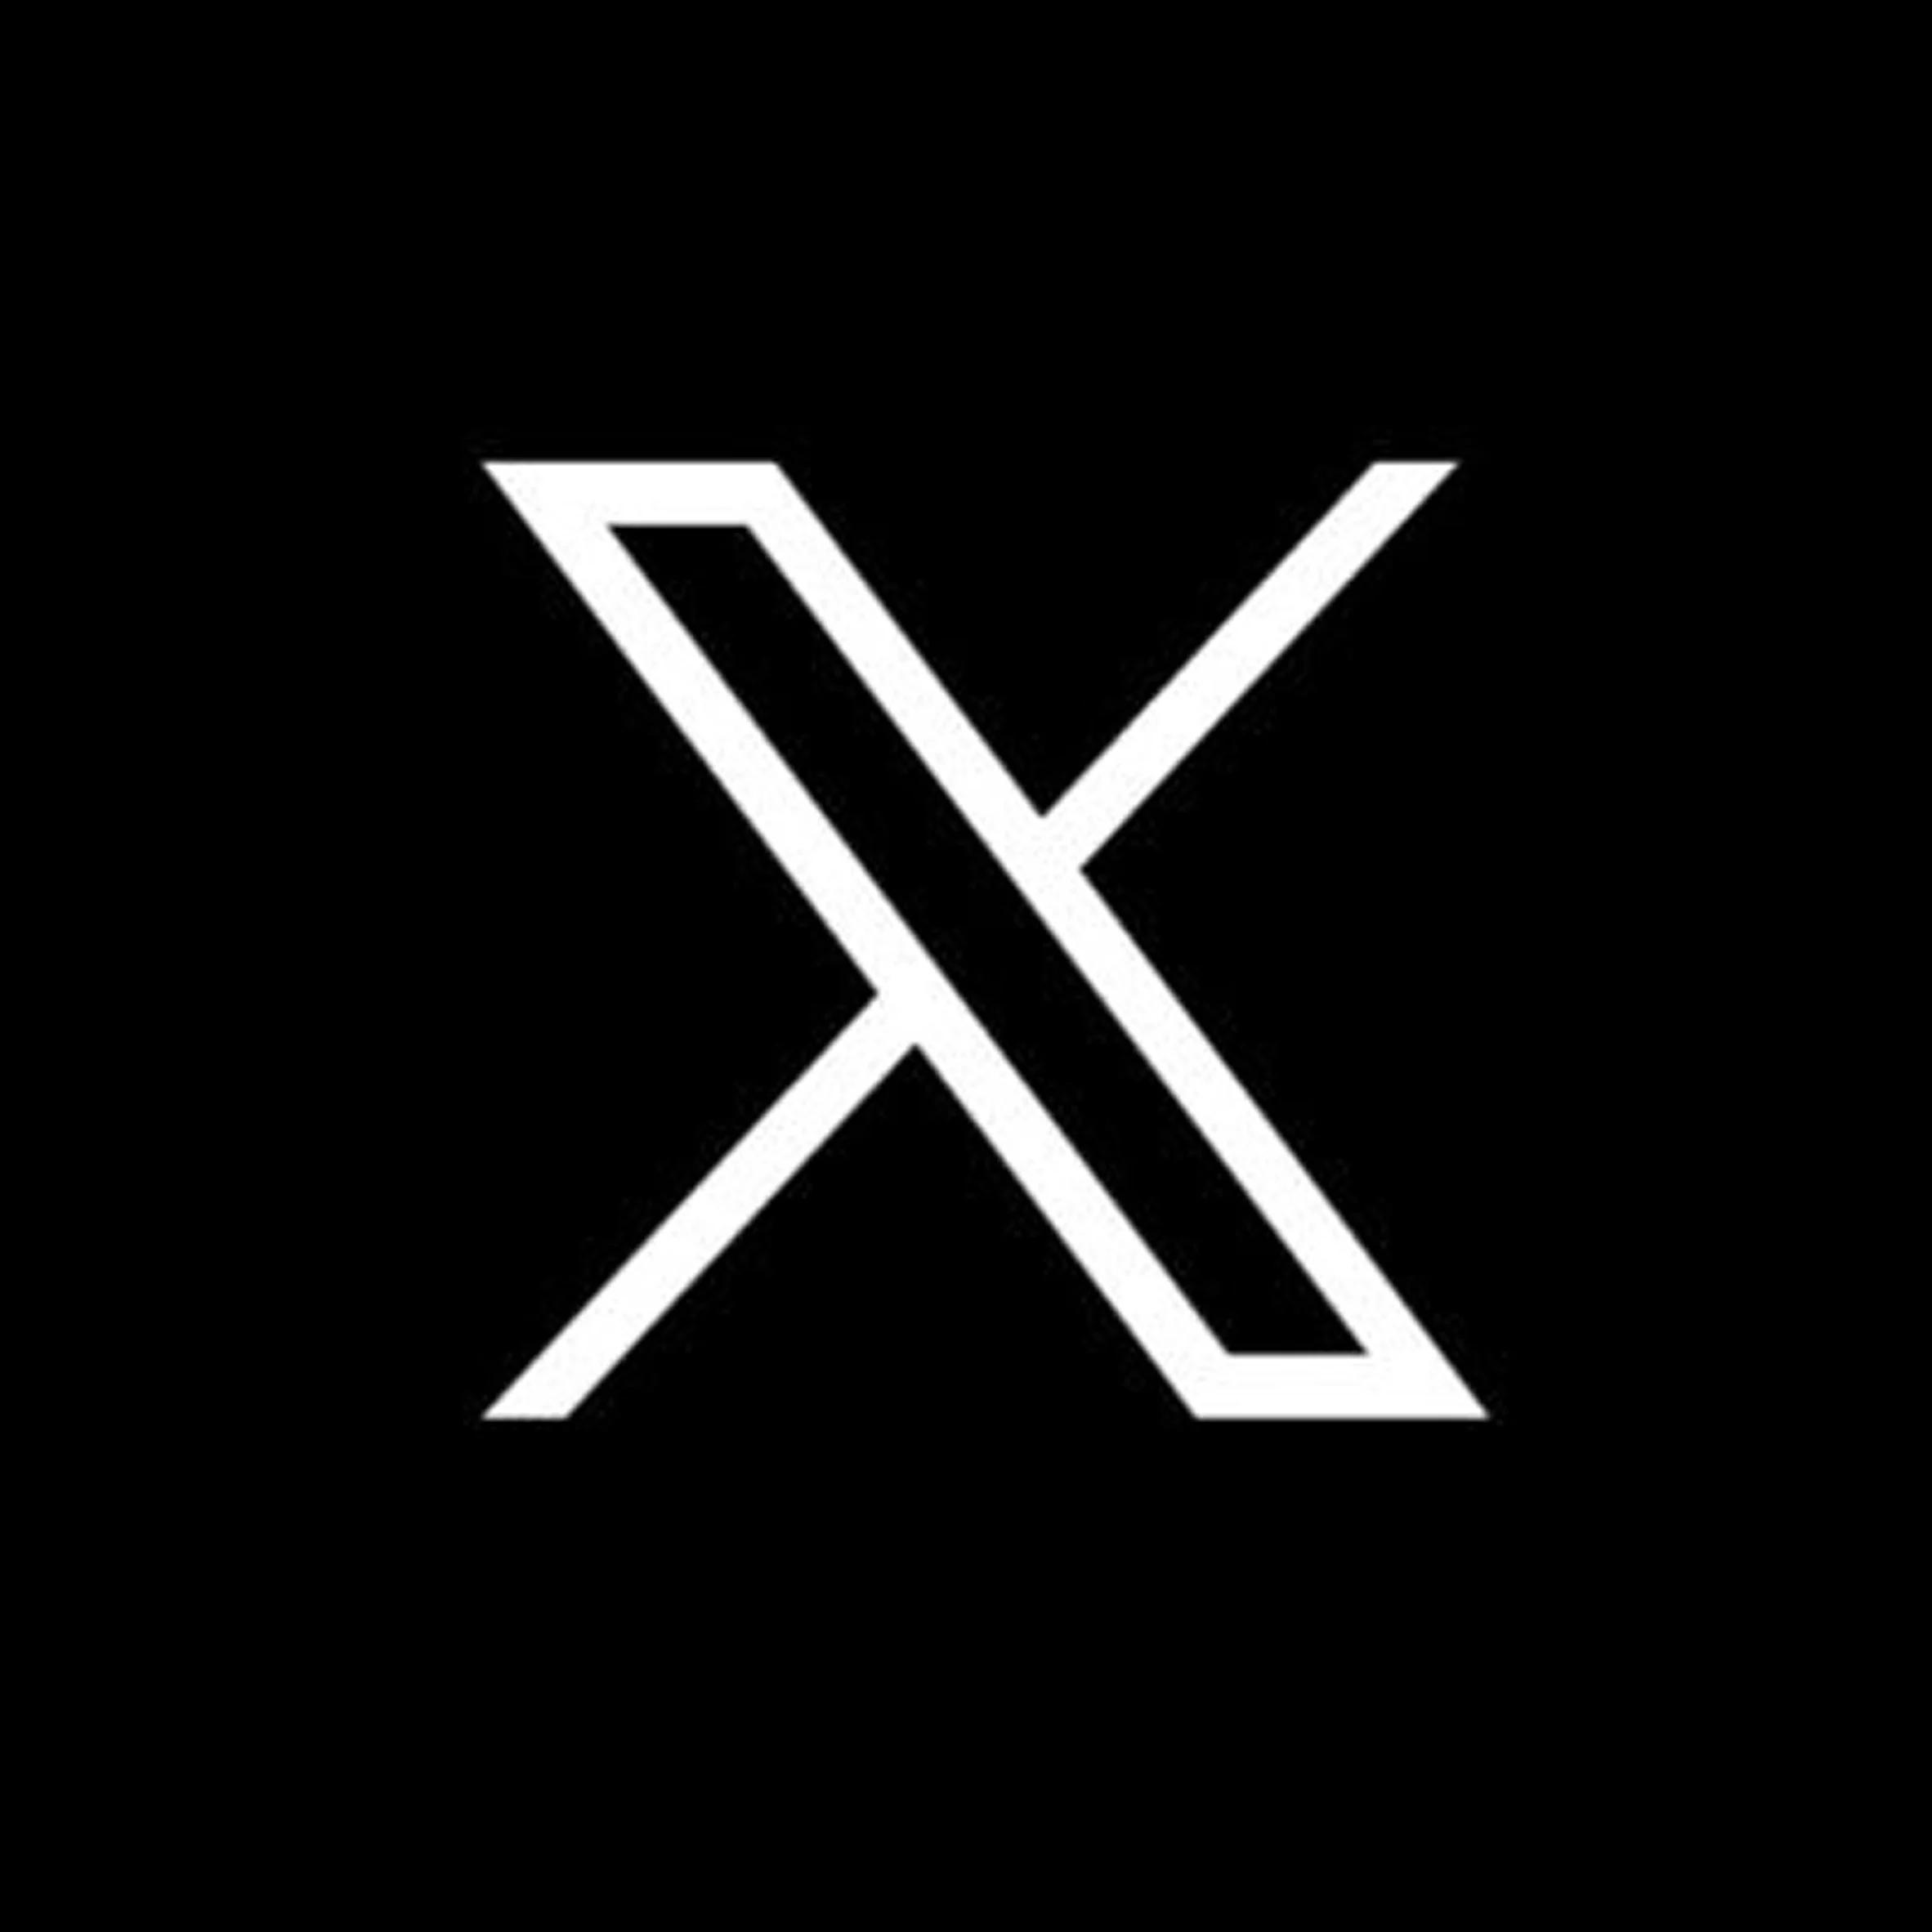 Icono de X